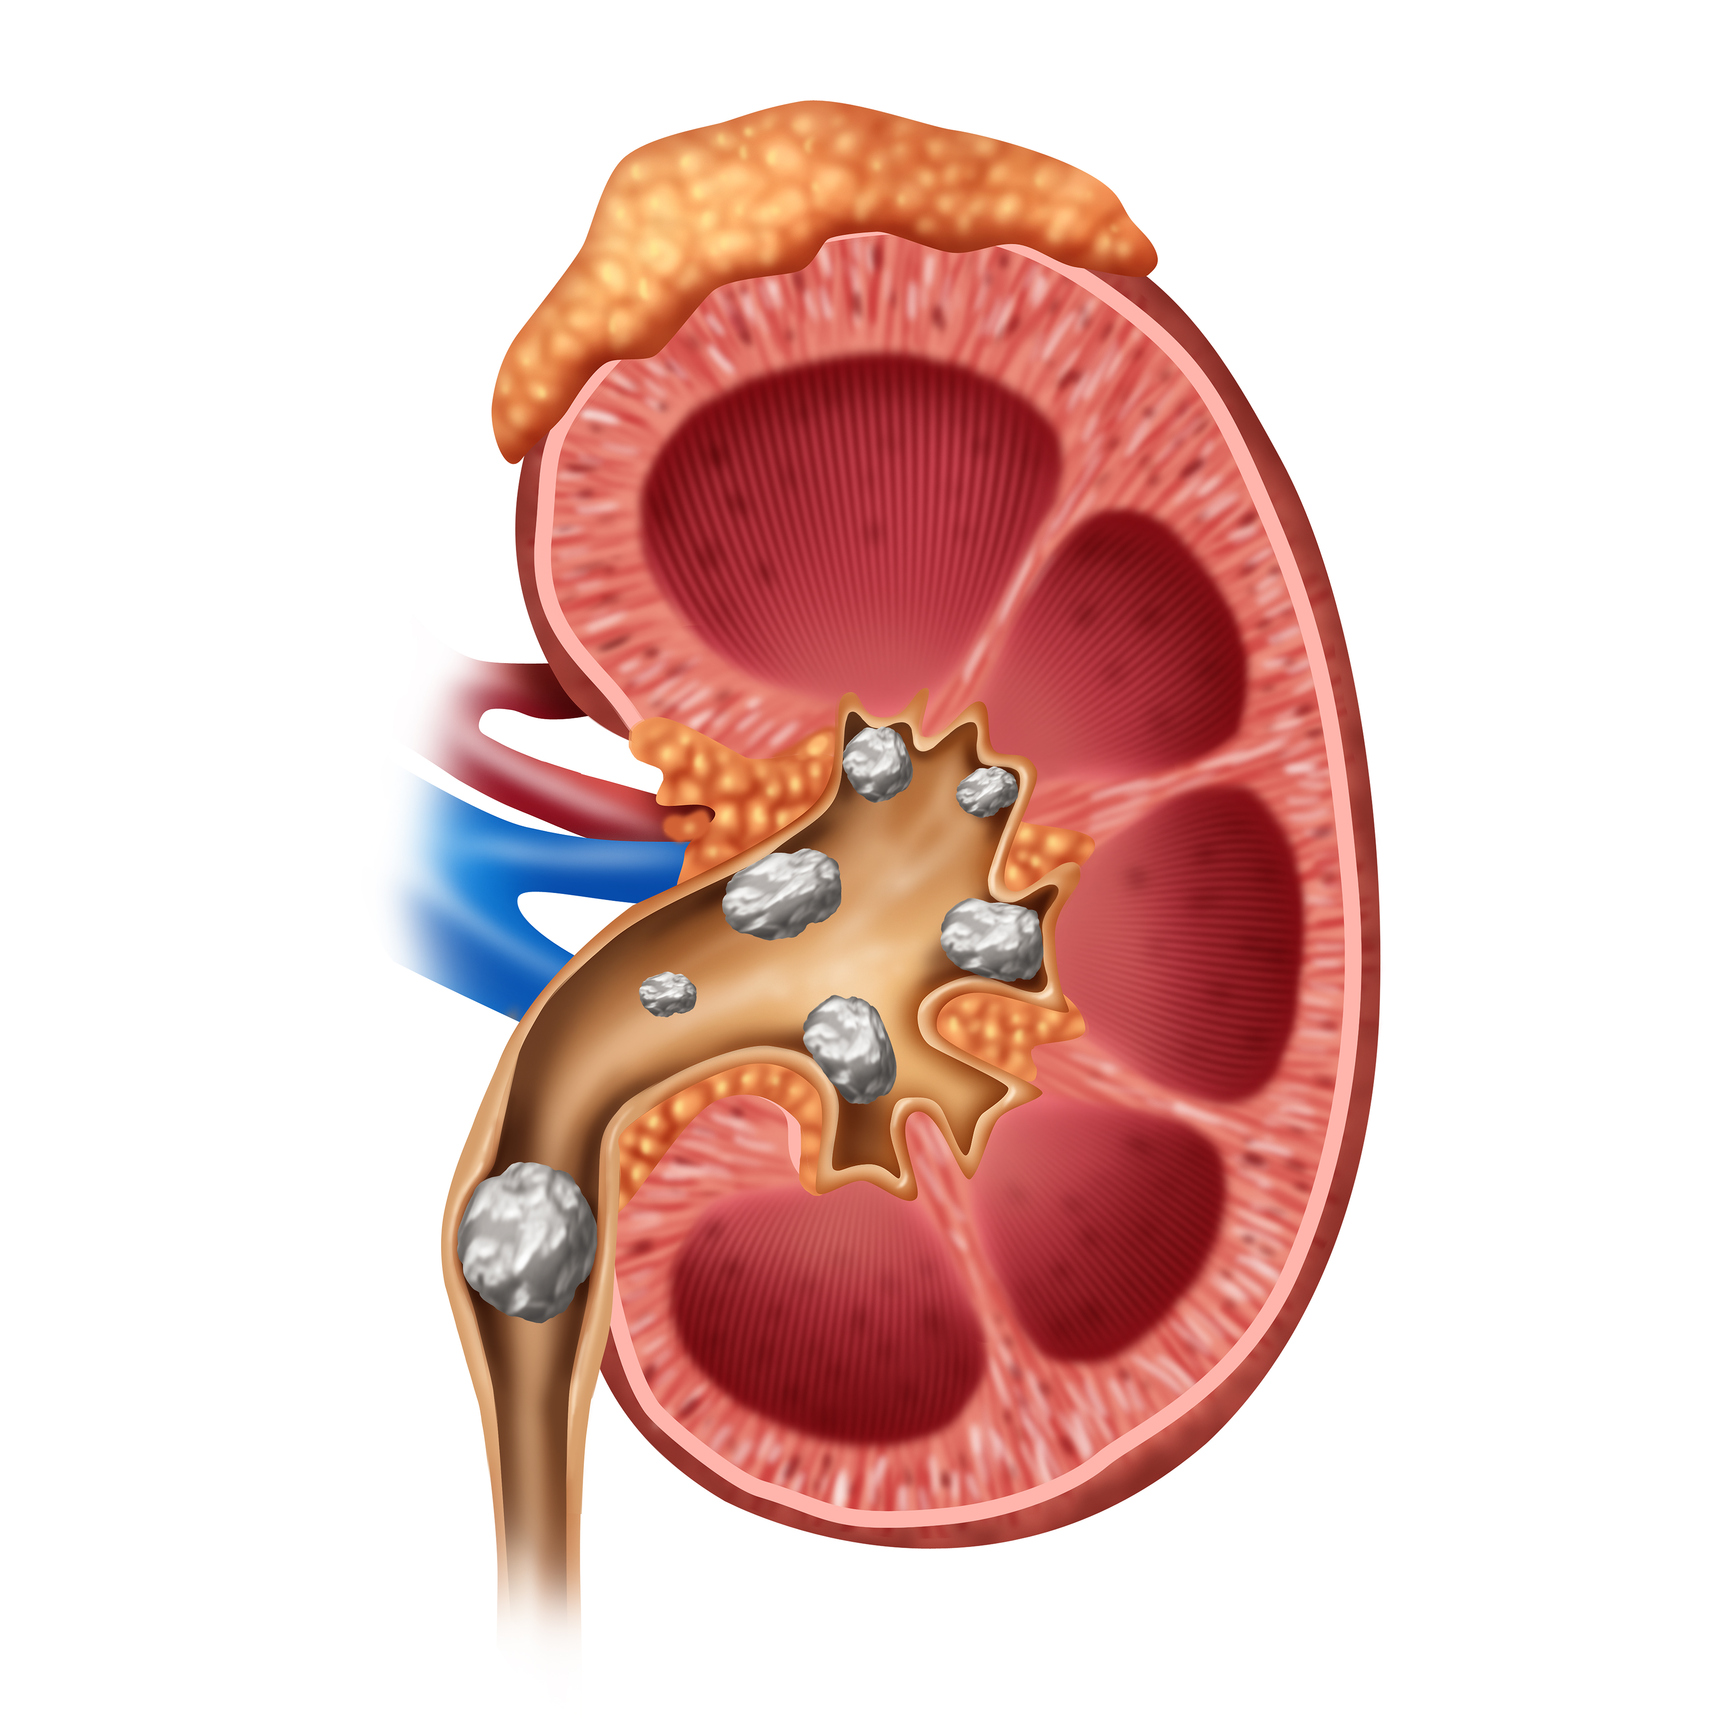 Kidney stone treatment complicat...